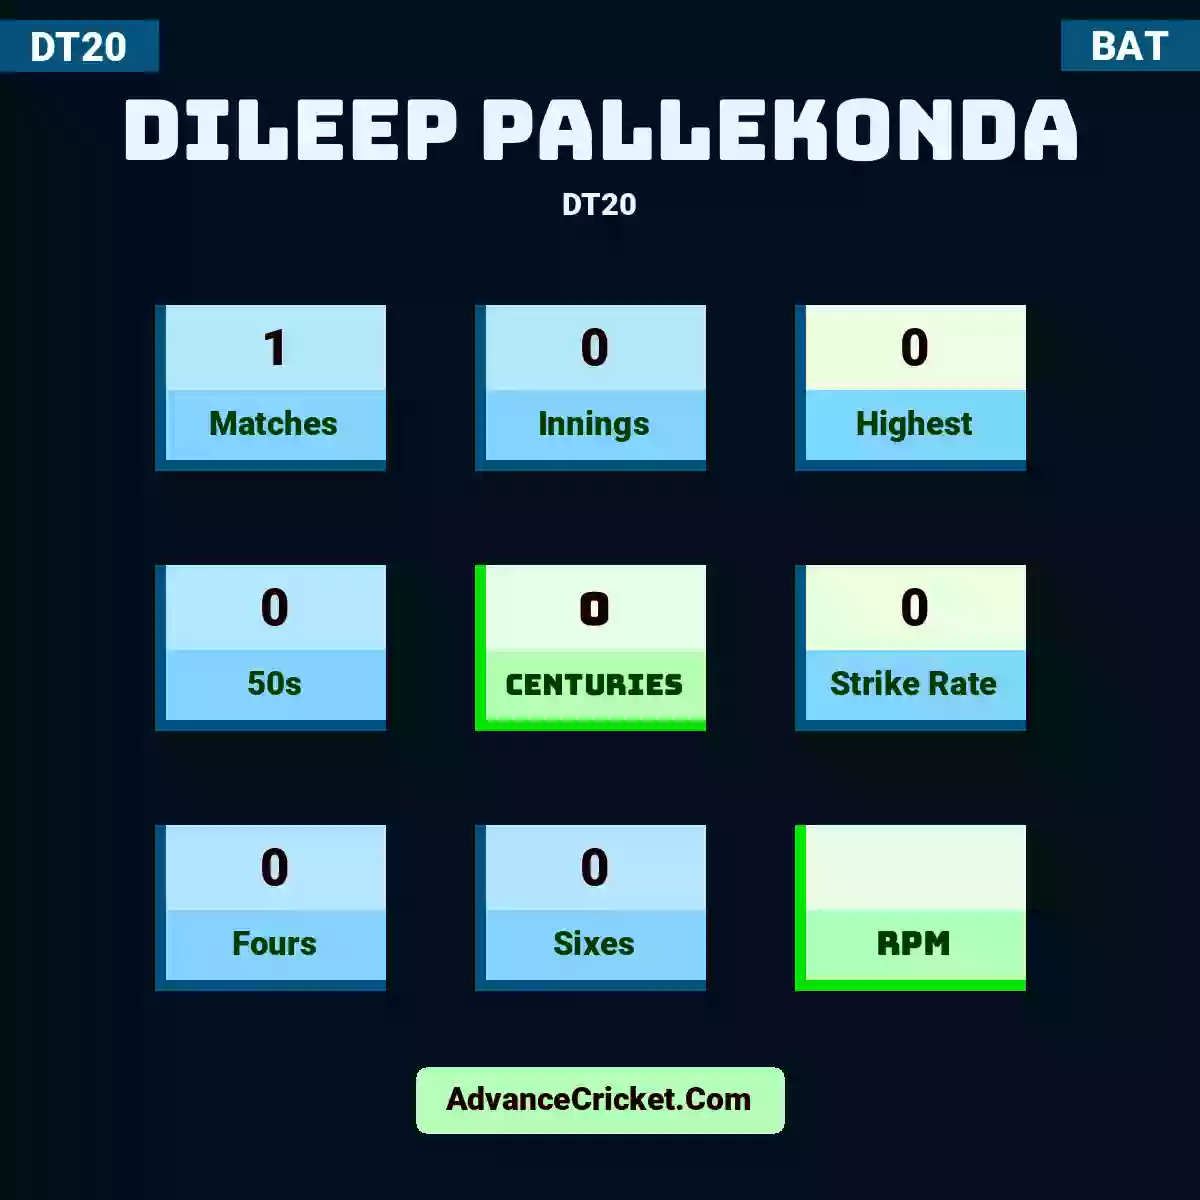 Dileep Pallekonda DT20 , Dileep Pallekonda played 1 matches, scored 0 runs as highest, 0 half-centuries, and 0 centuries, with a strike rate of 0. D.Pallekonda hit 0 fours and 0 sixes.